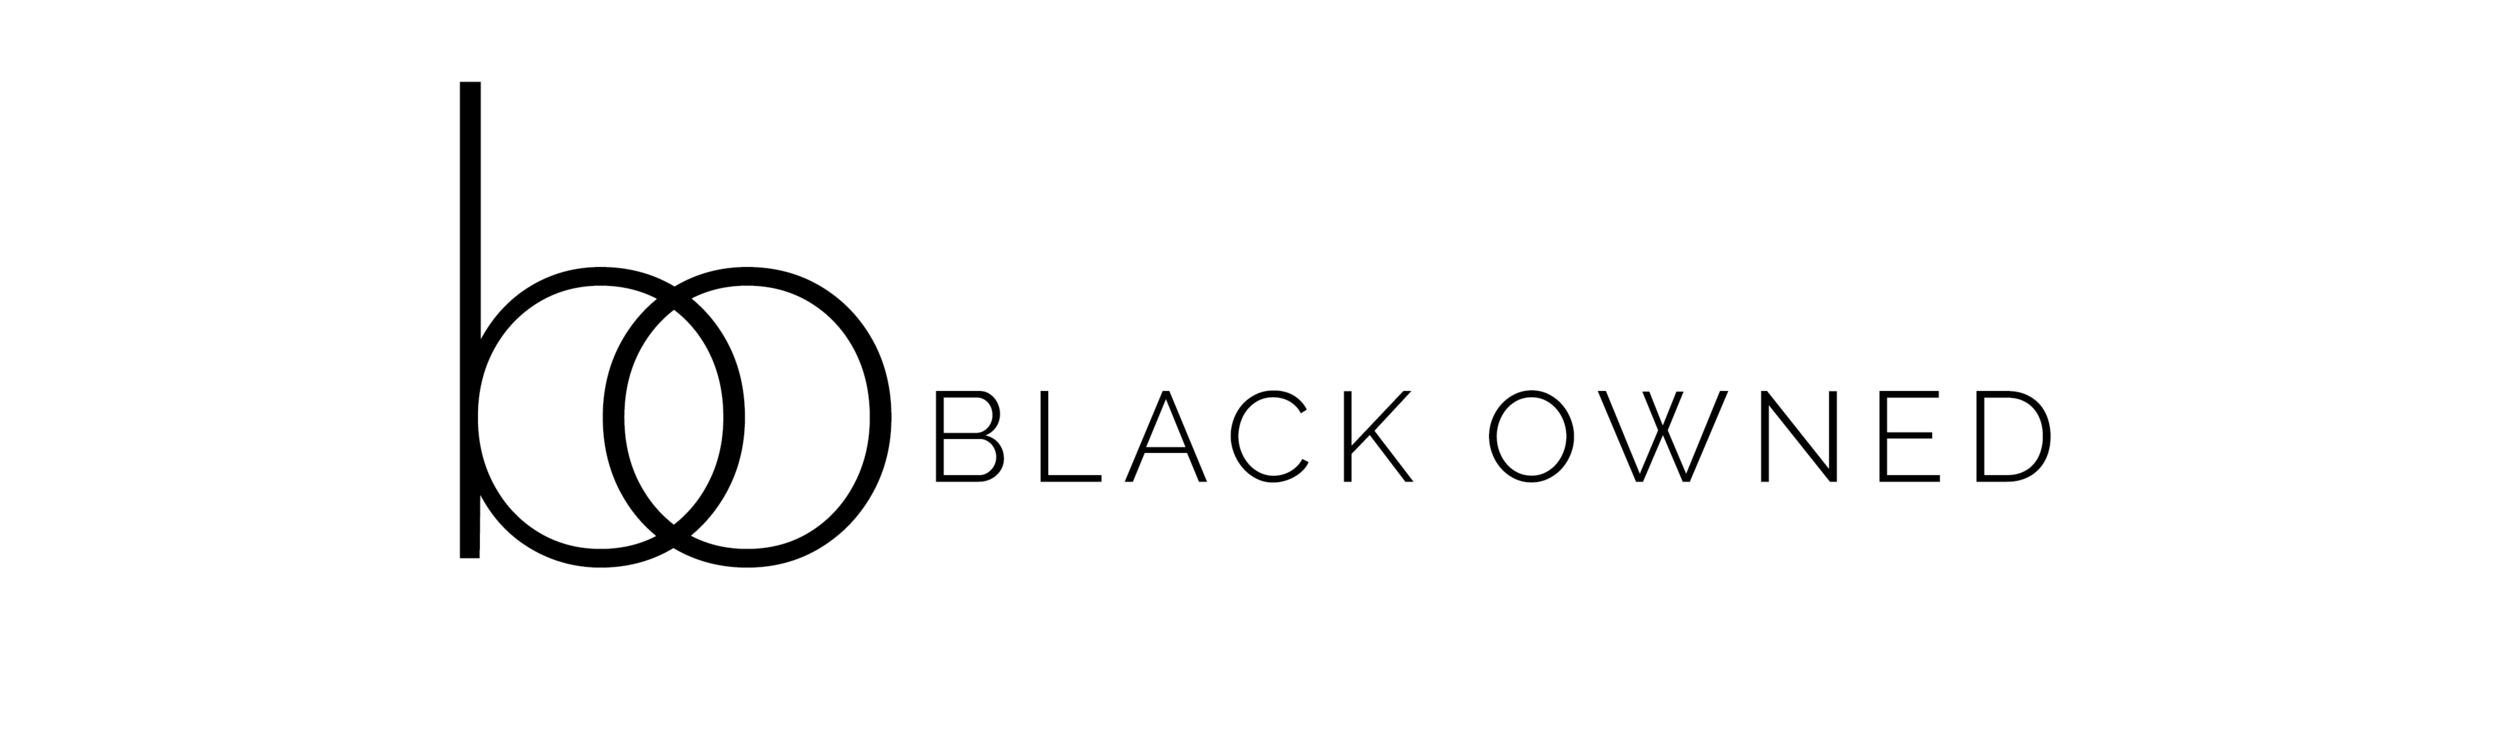 Black Owned Business_Logo Full Black.png